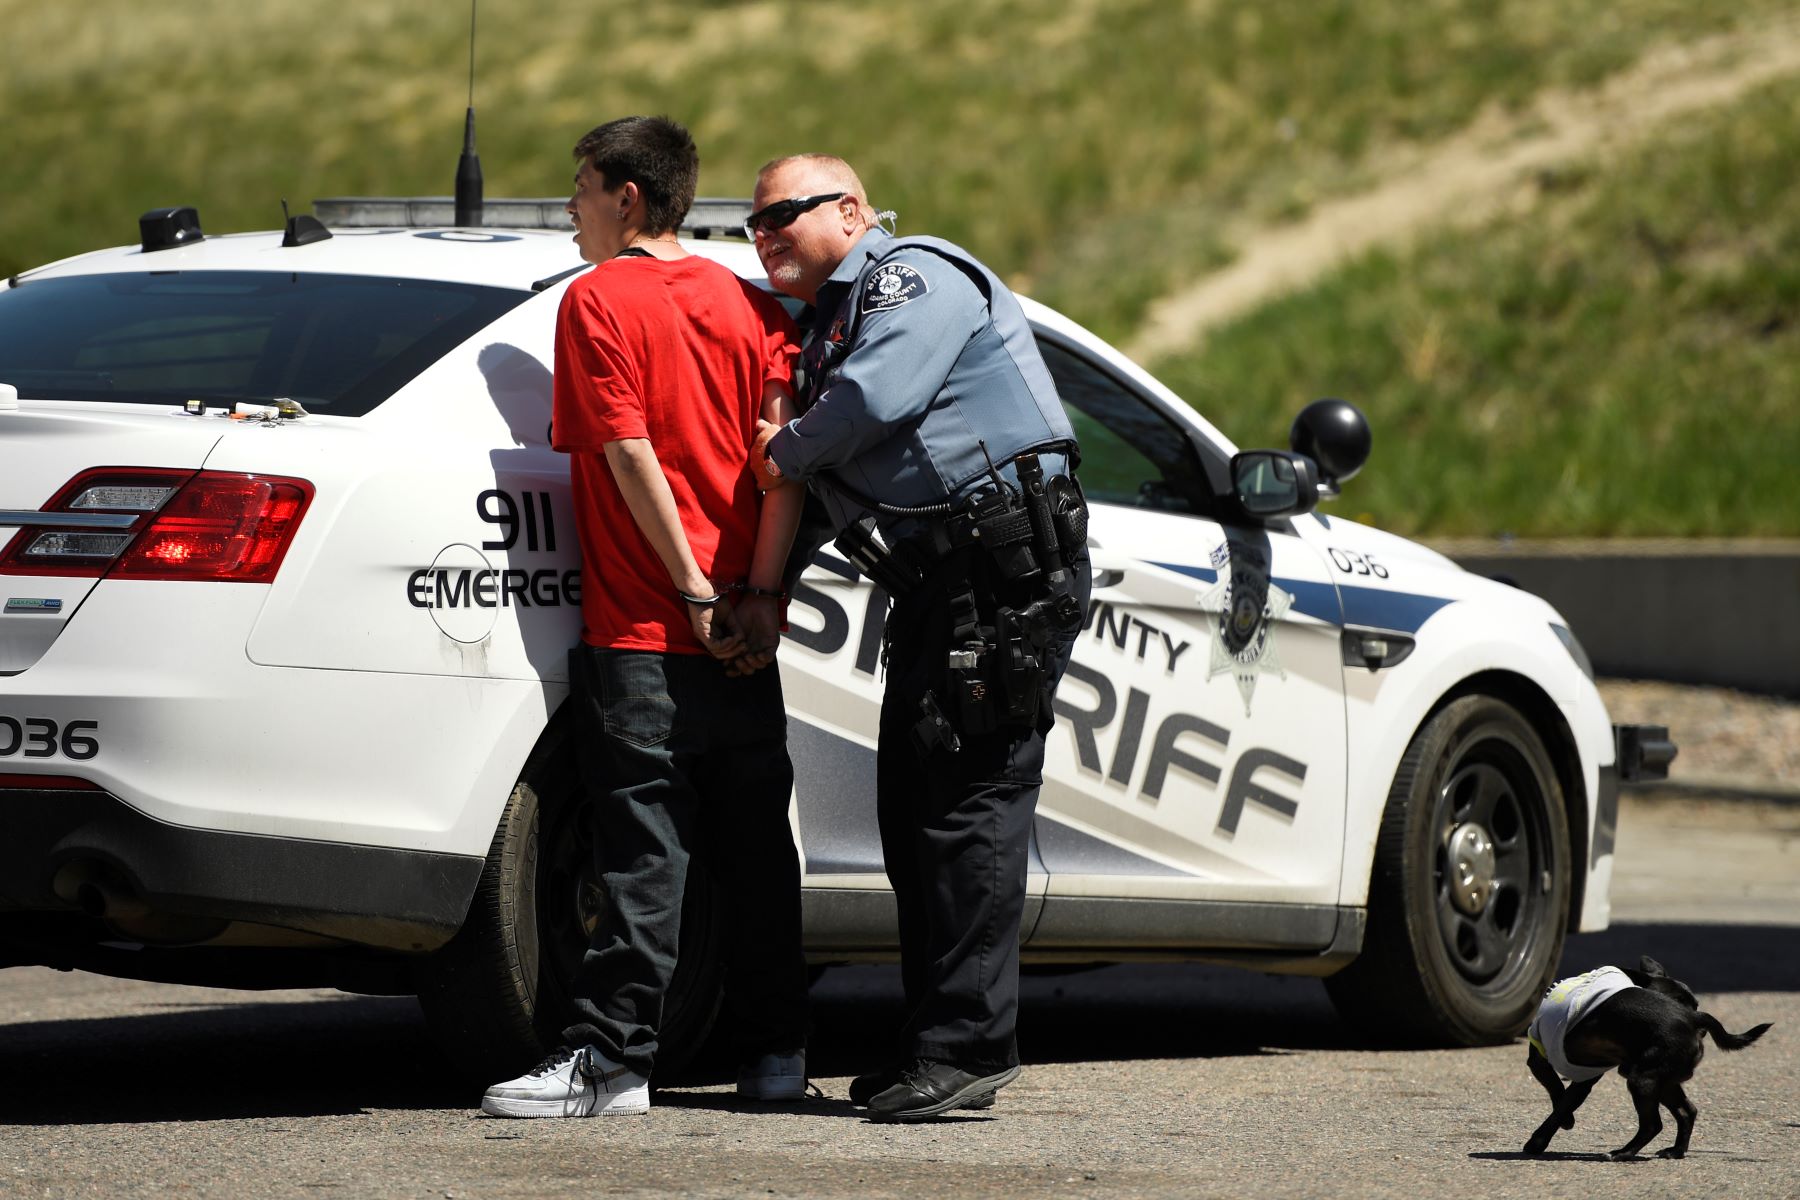 A car theft suspect arrested by police in Denver, Colorado